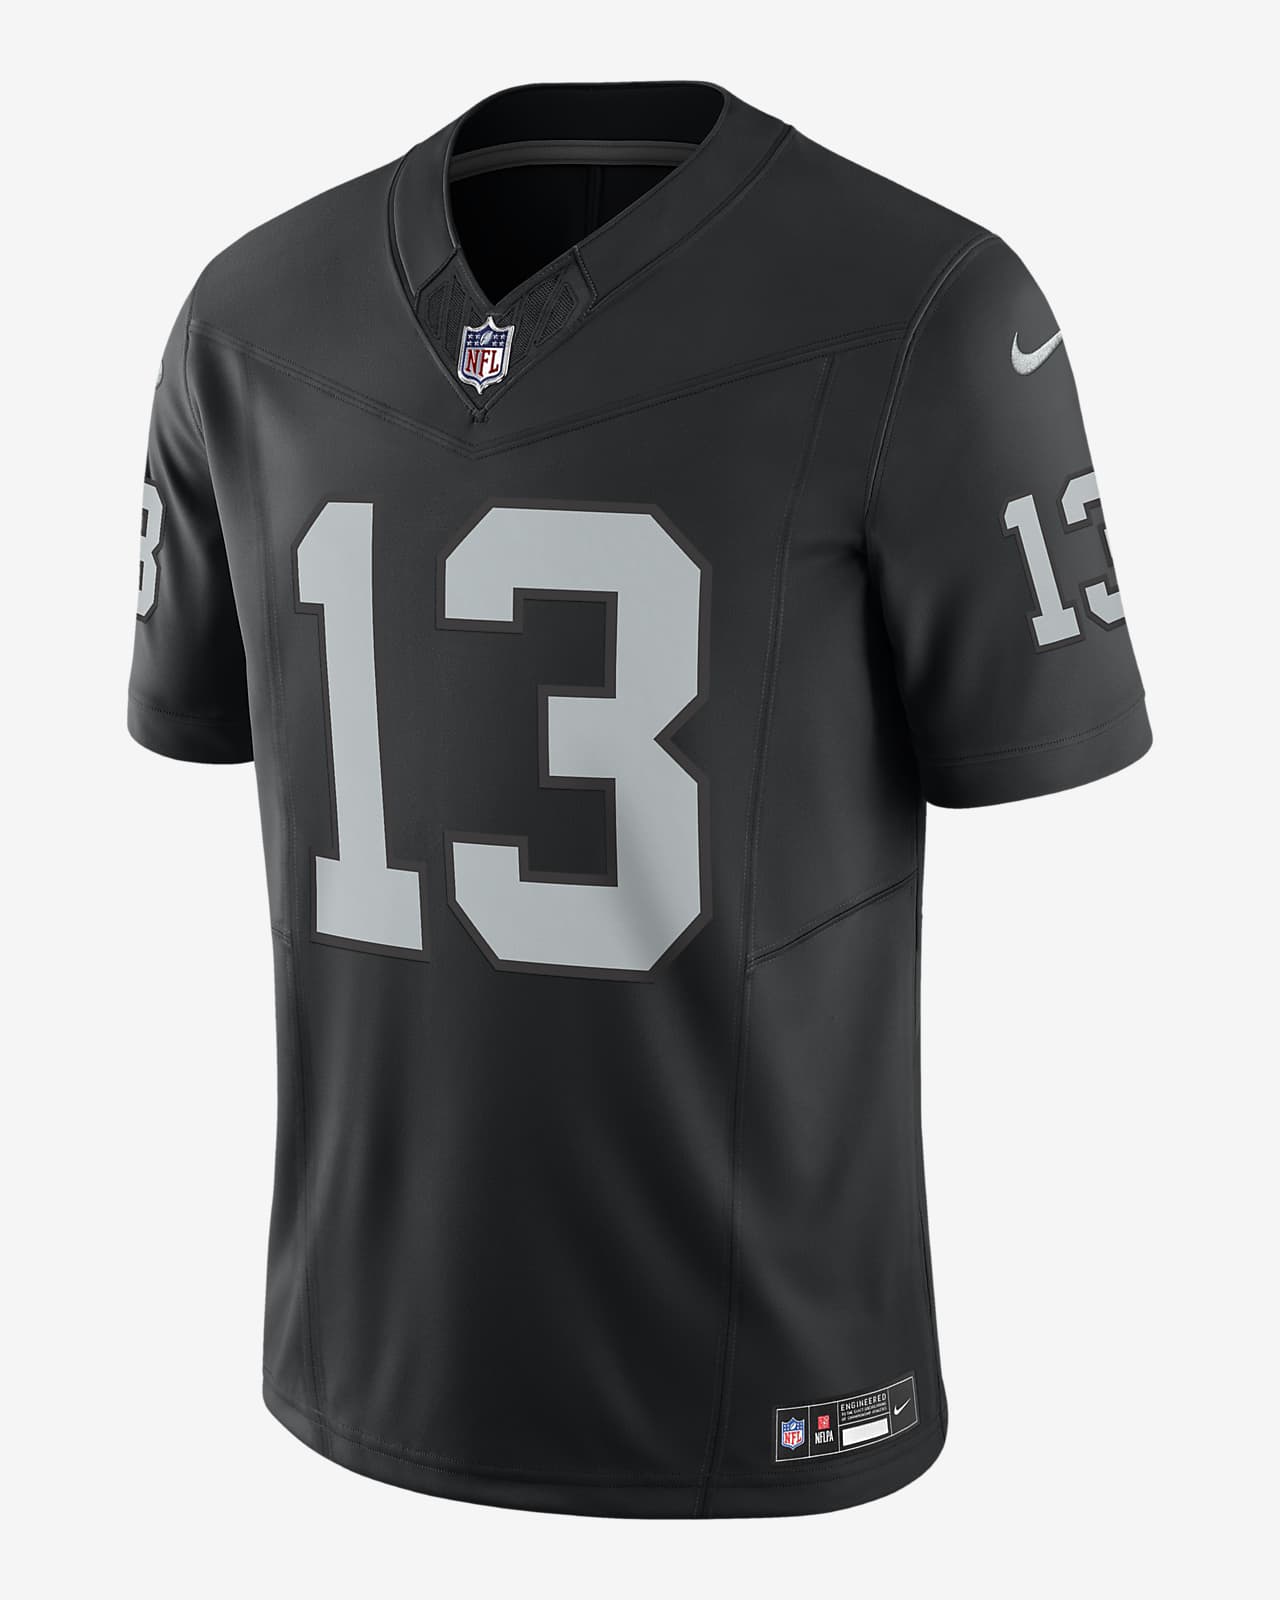 Jersey de fútbol americano Nike Dri-FIT de la NFL Limited para hombre Hunter Renfrow Las Vegas Raiders